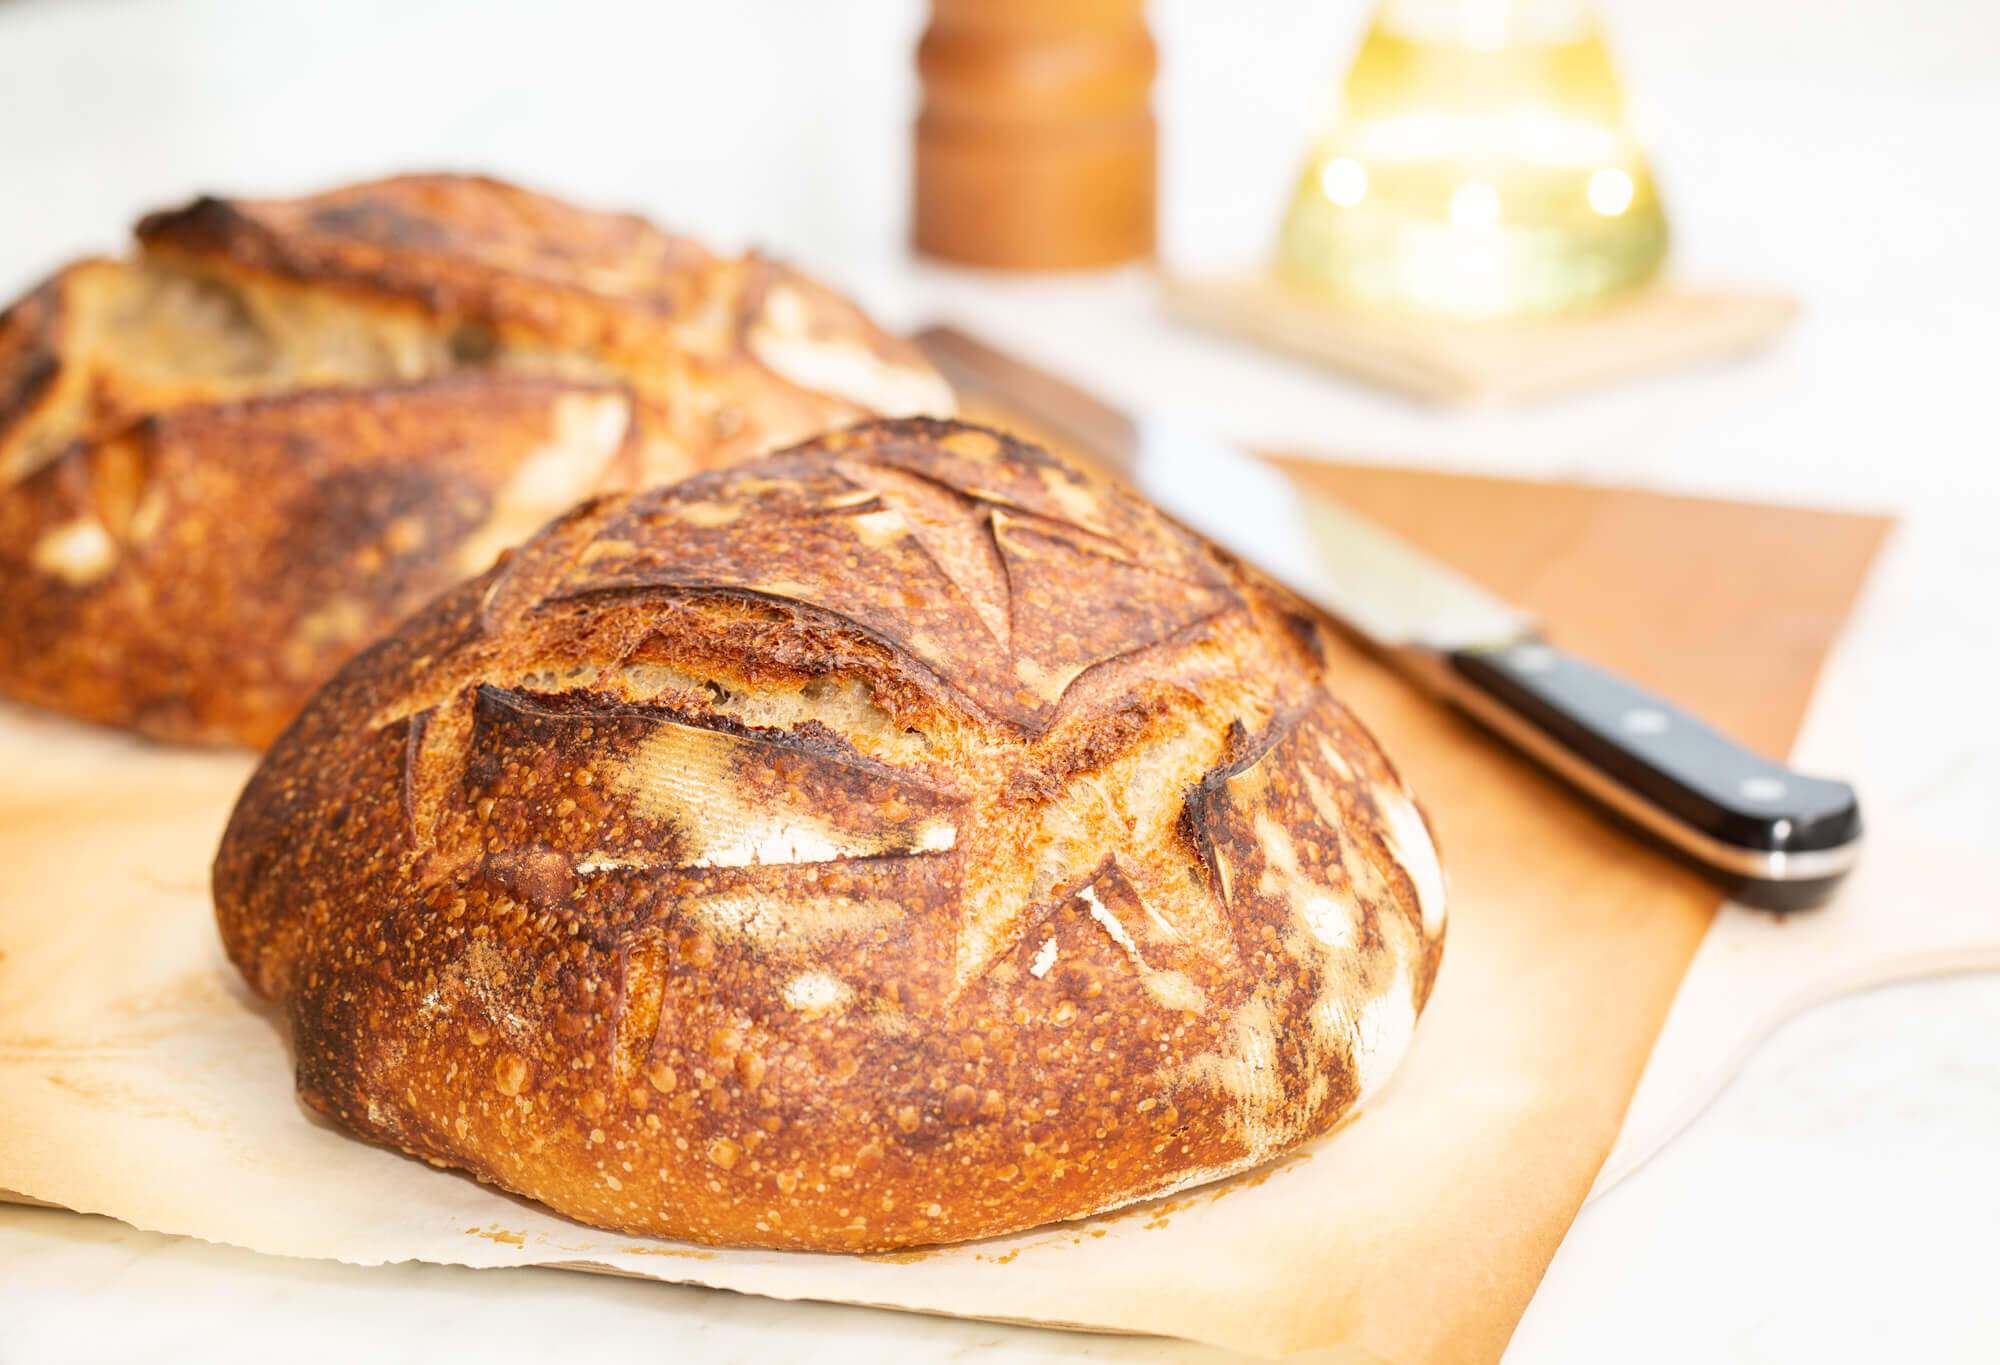 Homemade sourdough bread